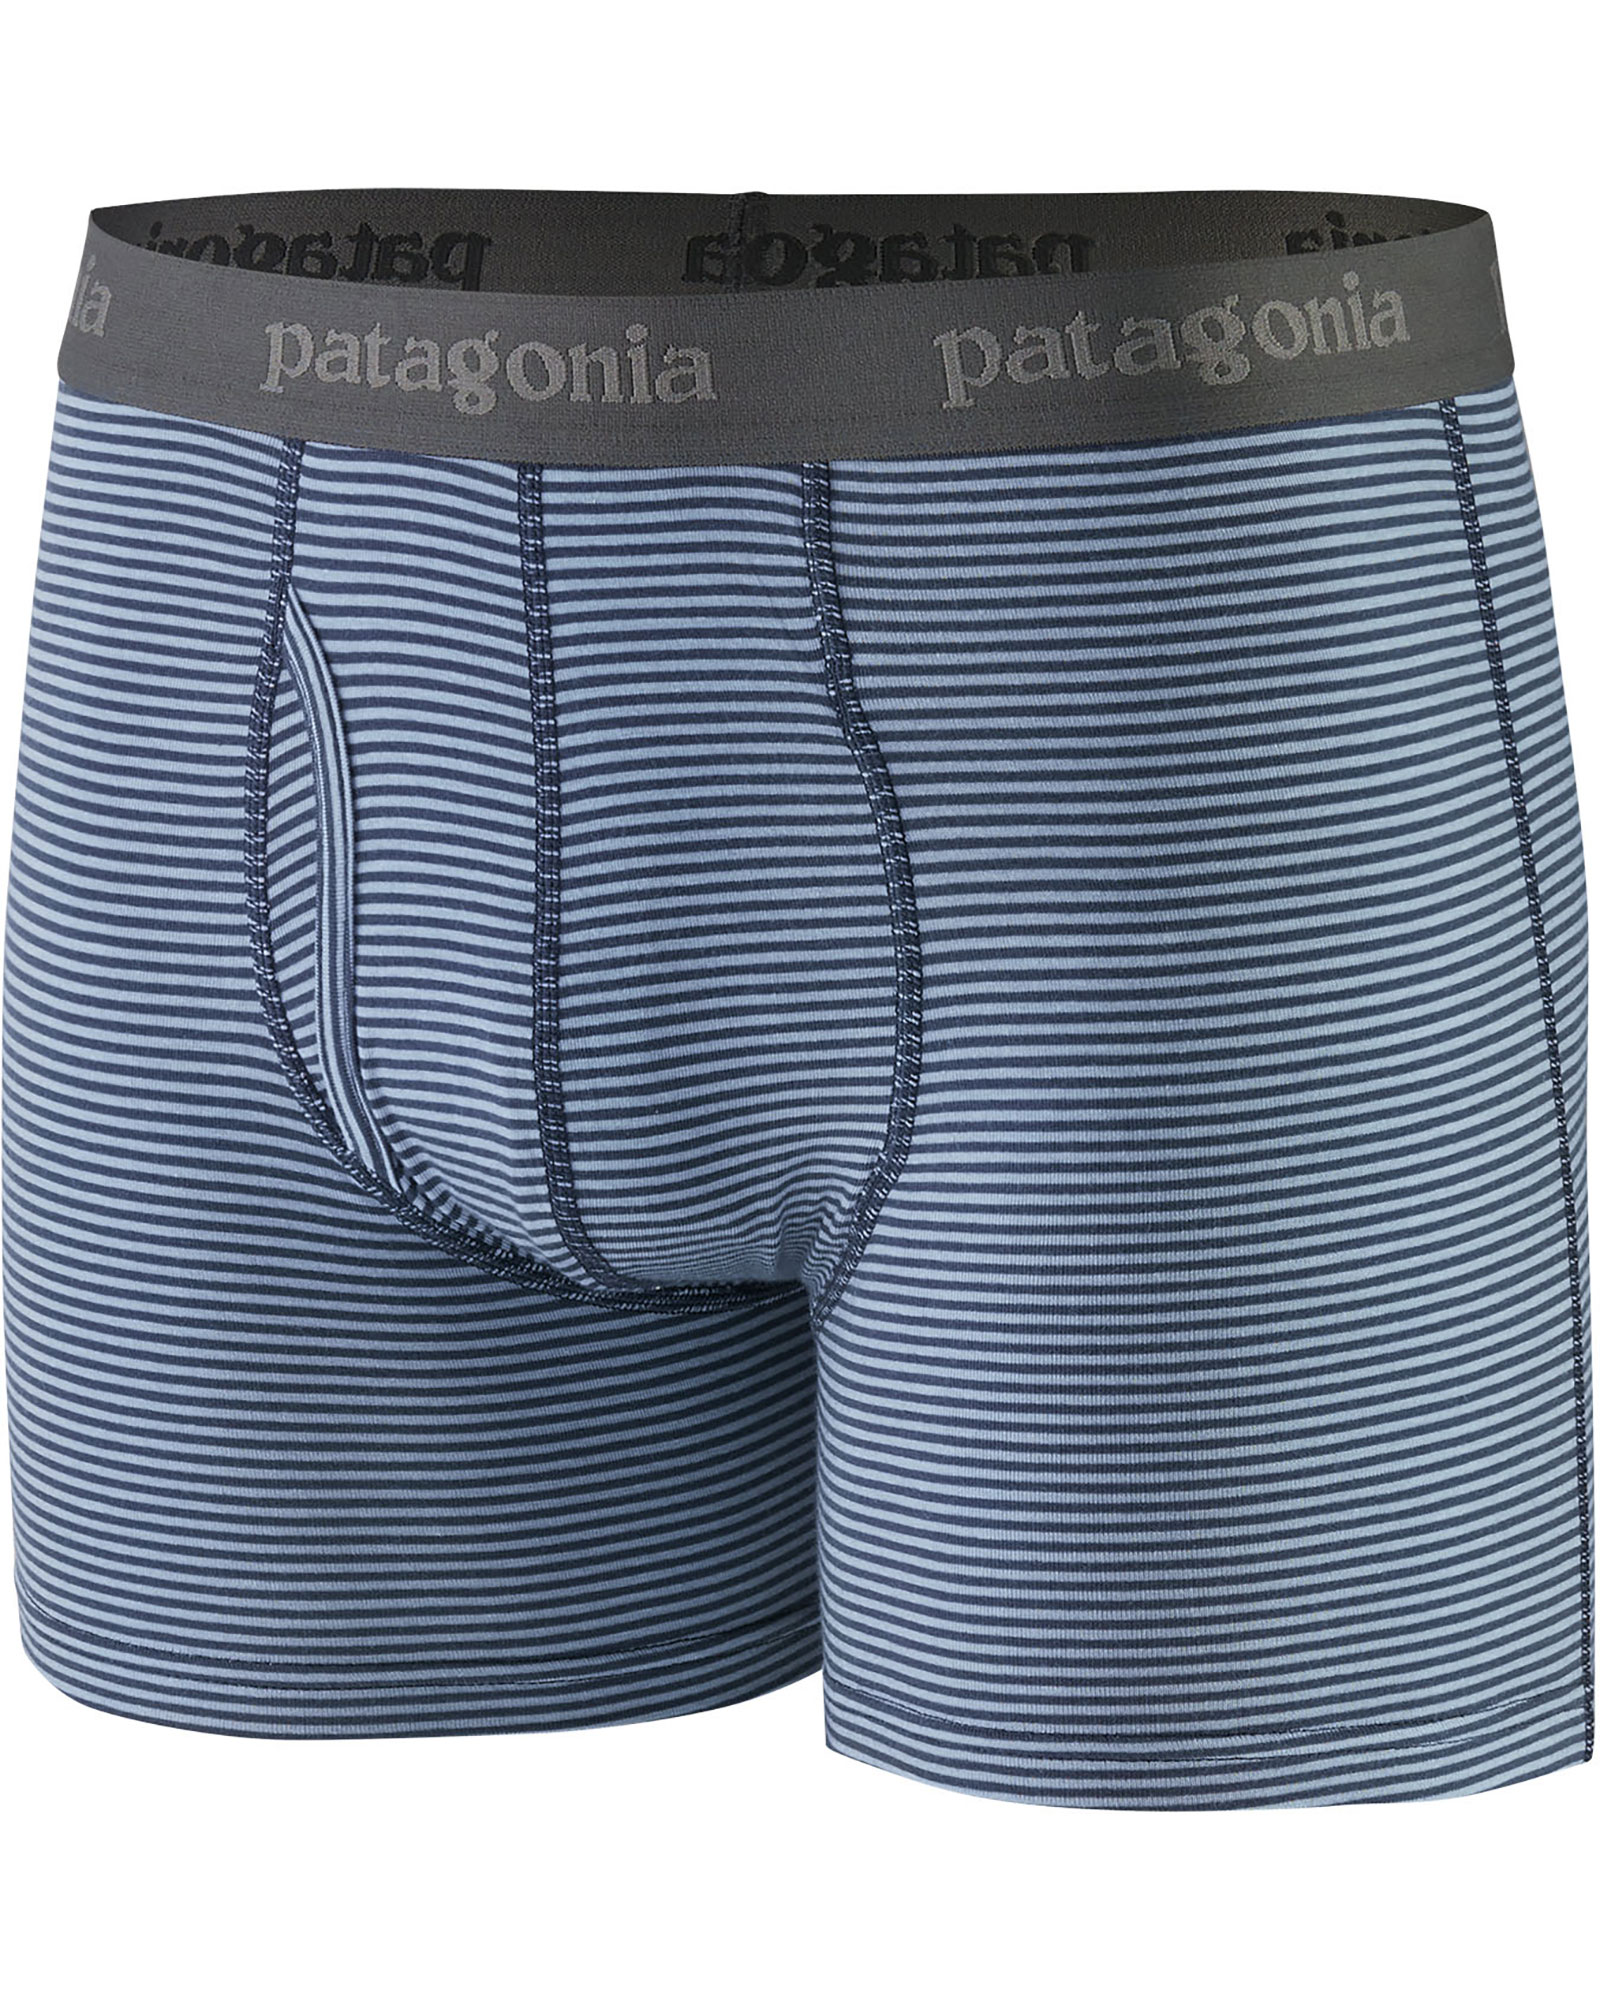 Patagonia Men’s Essential 3" Boxers - Fathom Stripe/ New Navy S